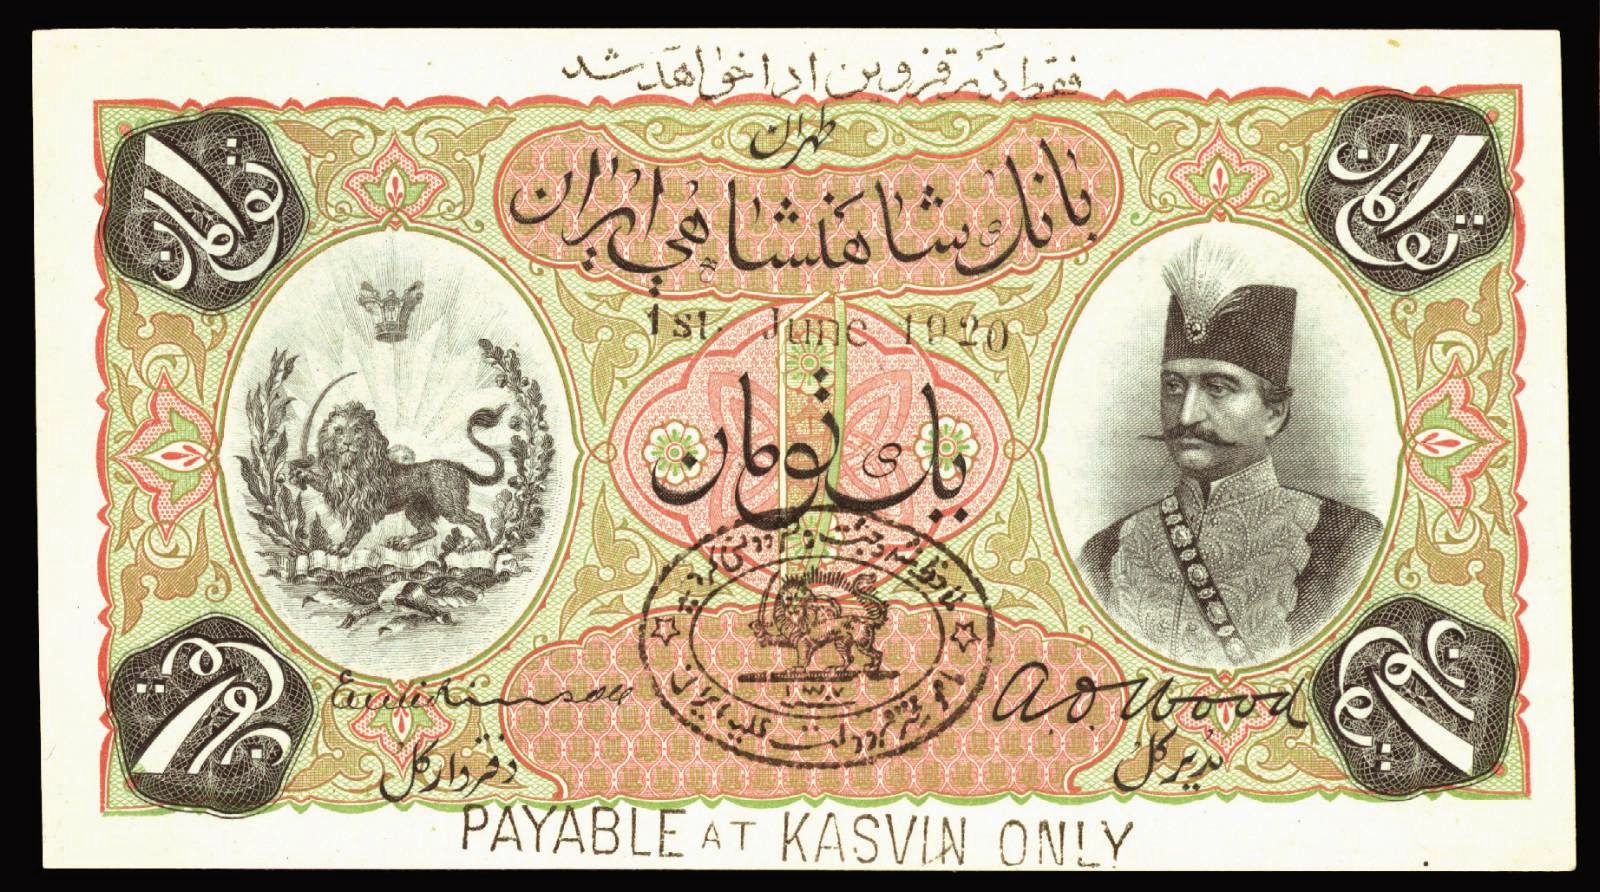 Iran Banknotes One Toman note 1920 Imperial bank of Persia, Naser al-Din Shah Qajar